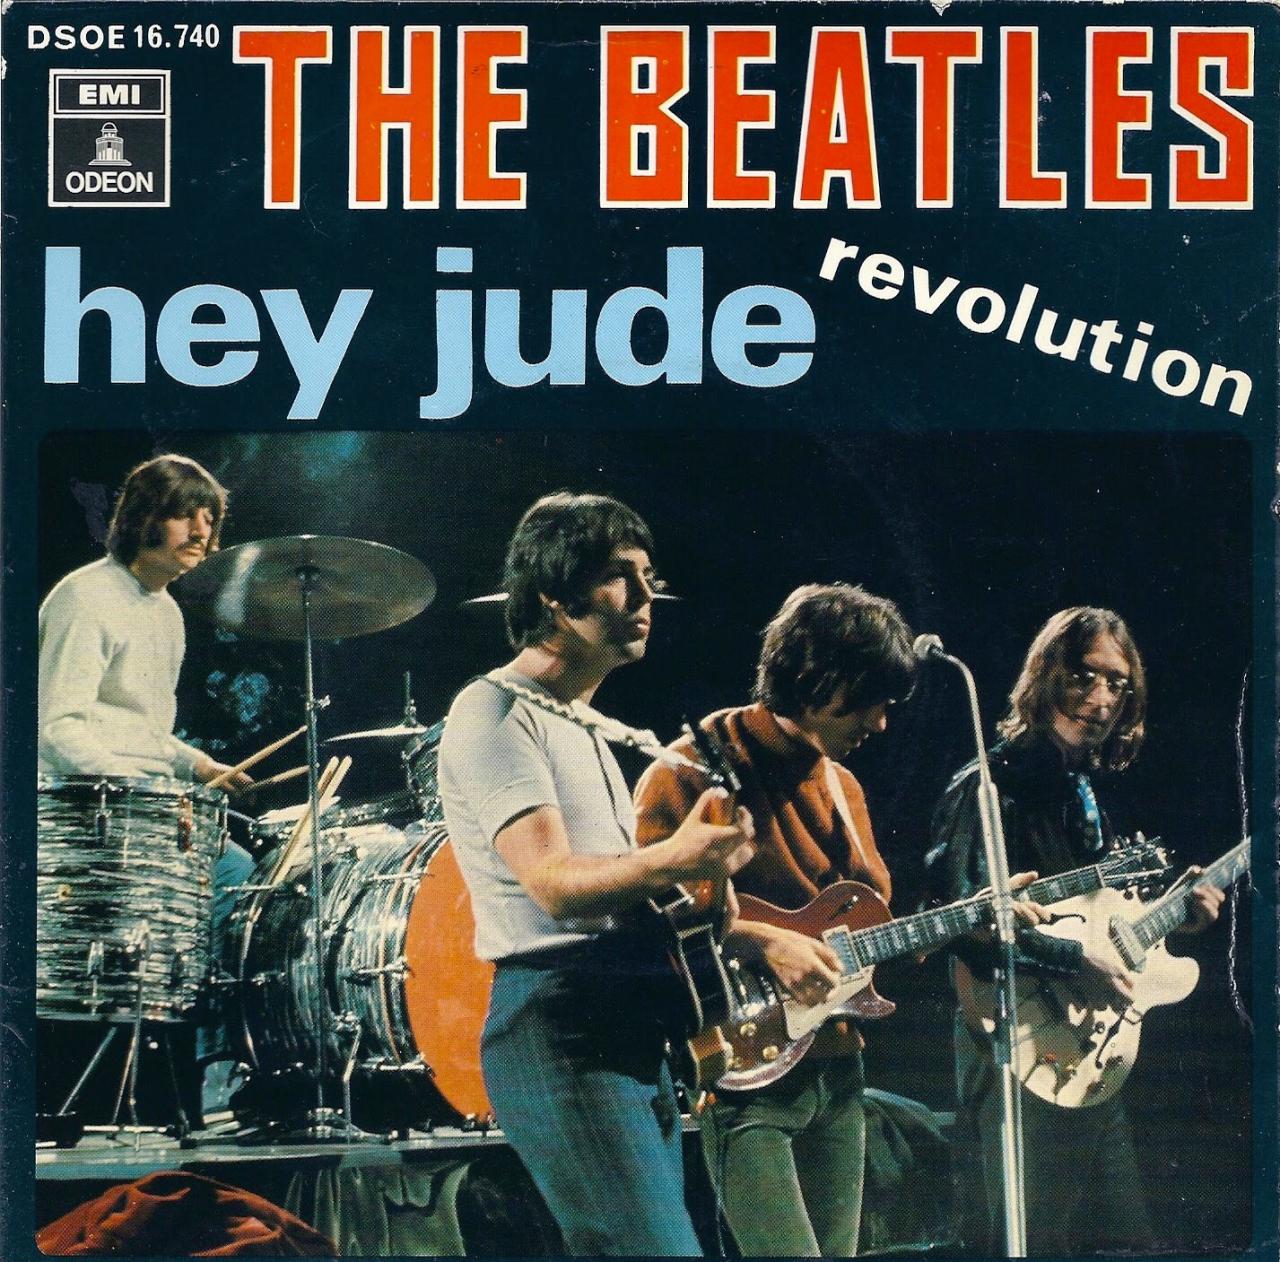 The Beatles: Hey Jude (Music Video 1968) - Imdb